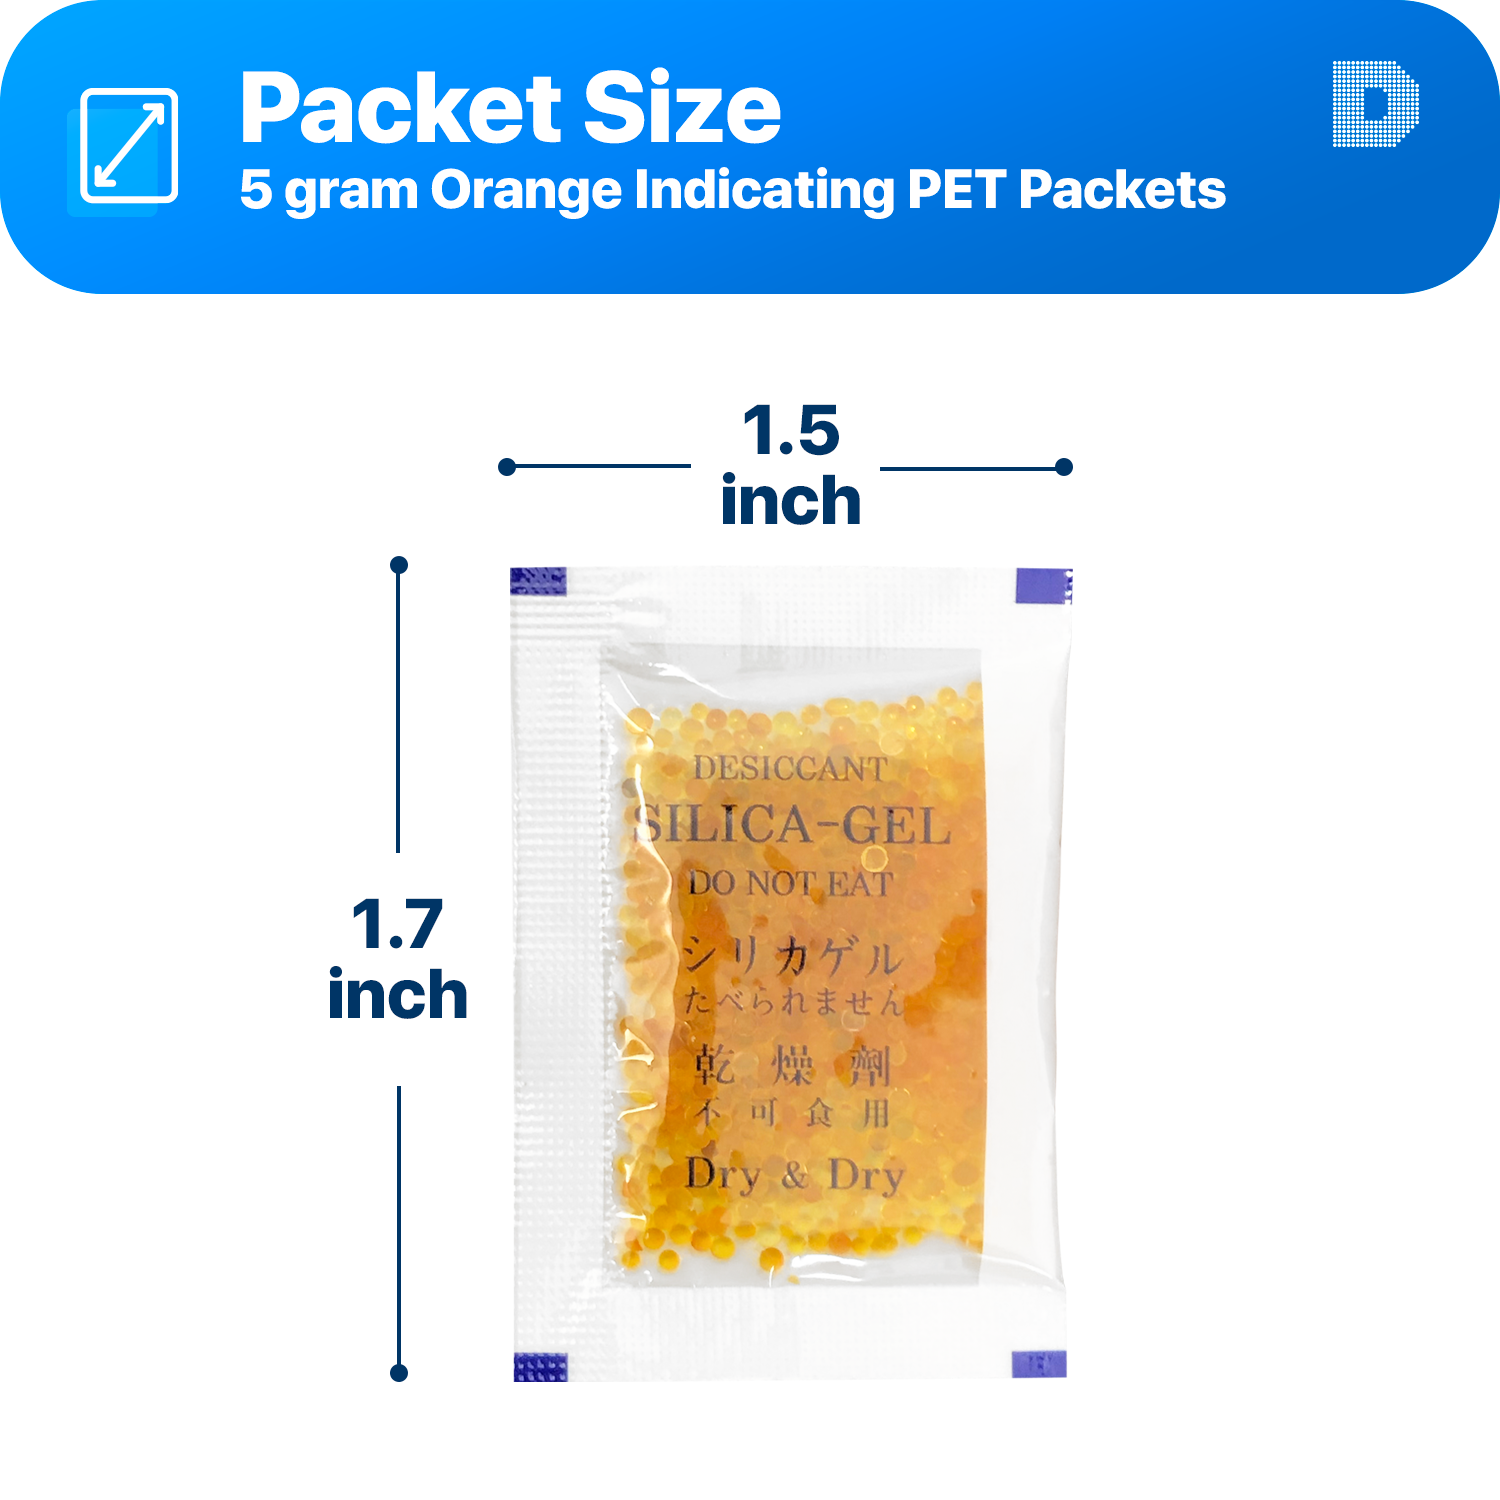 5 Gram Orange Indicating Clear Plastic(PET) Silica Gel Packets